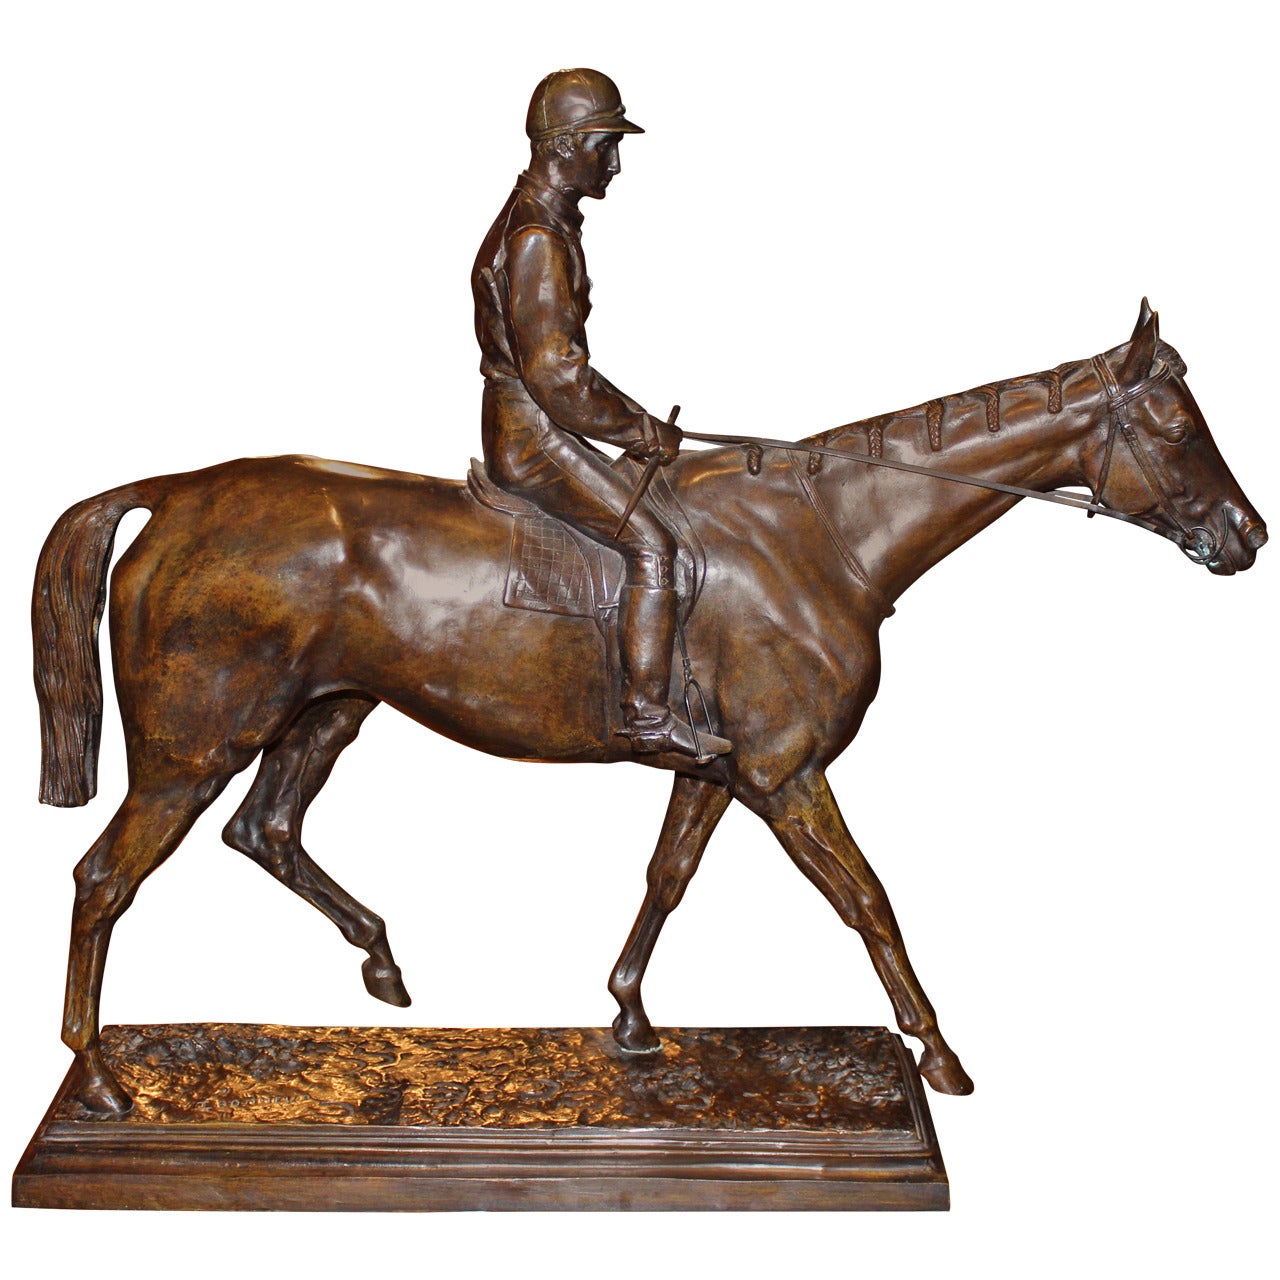 After Isidore Jules Bonheur, Equestrian Bronze Sculpture of a Horse and Jockey